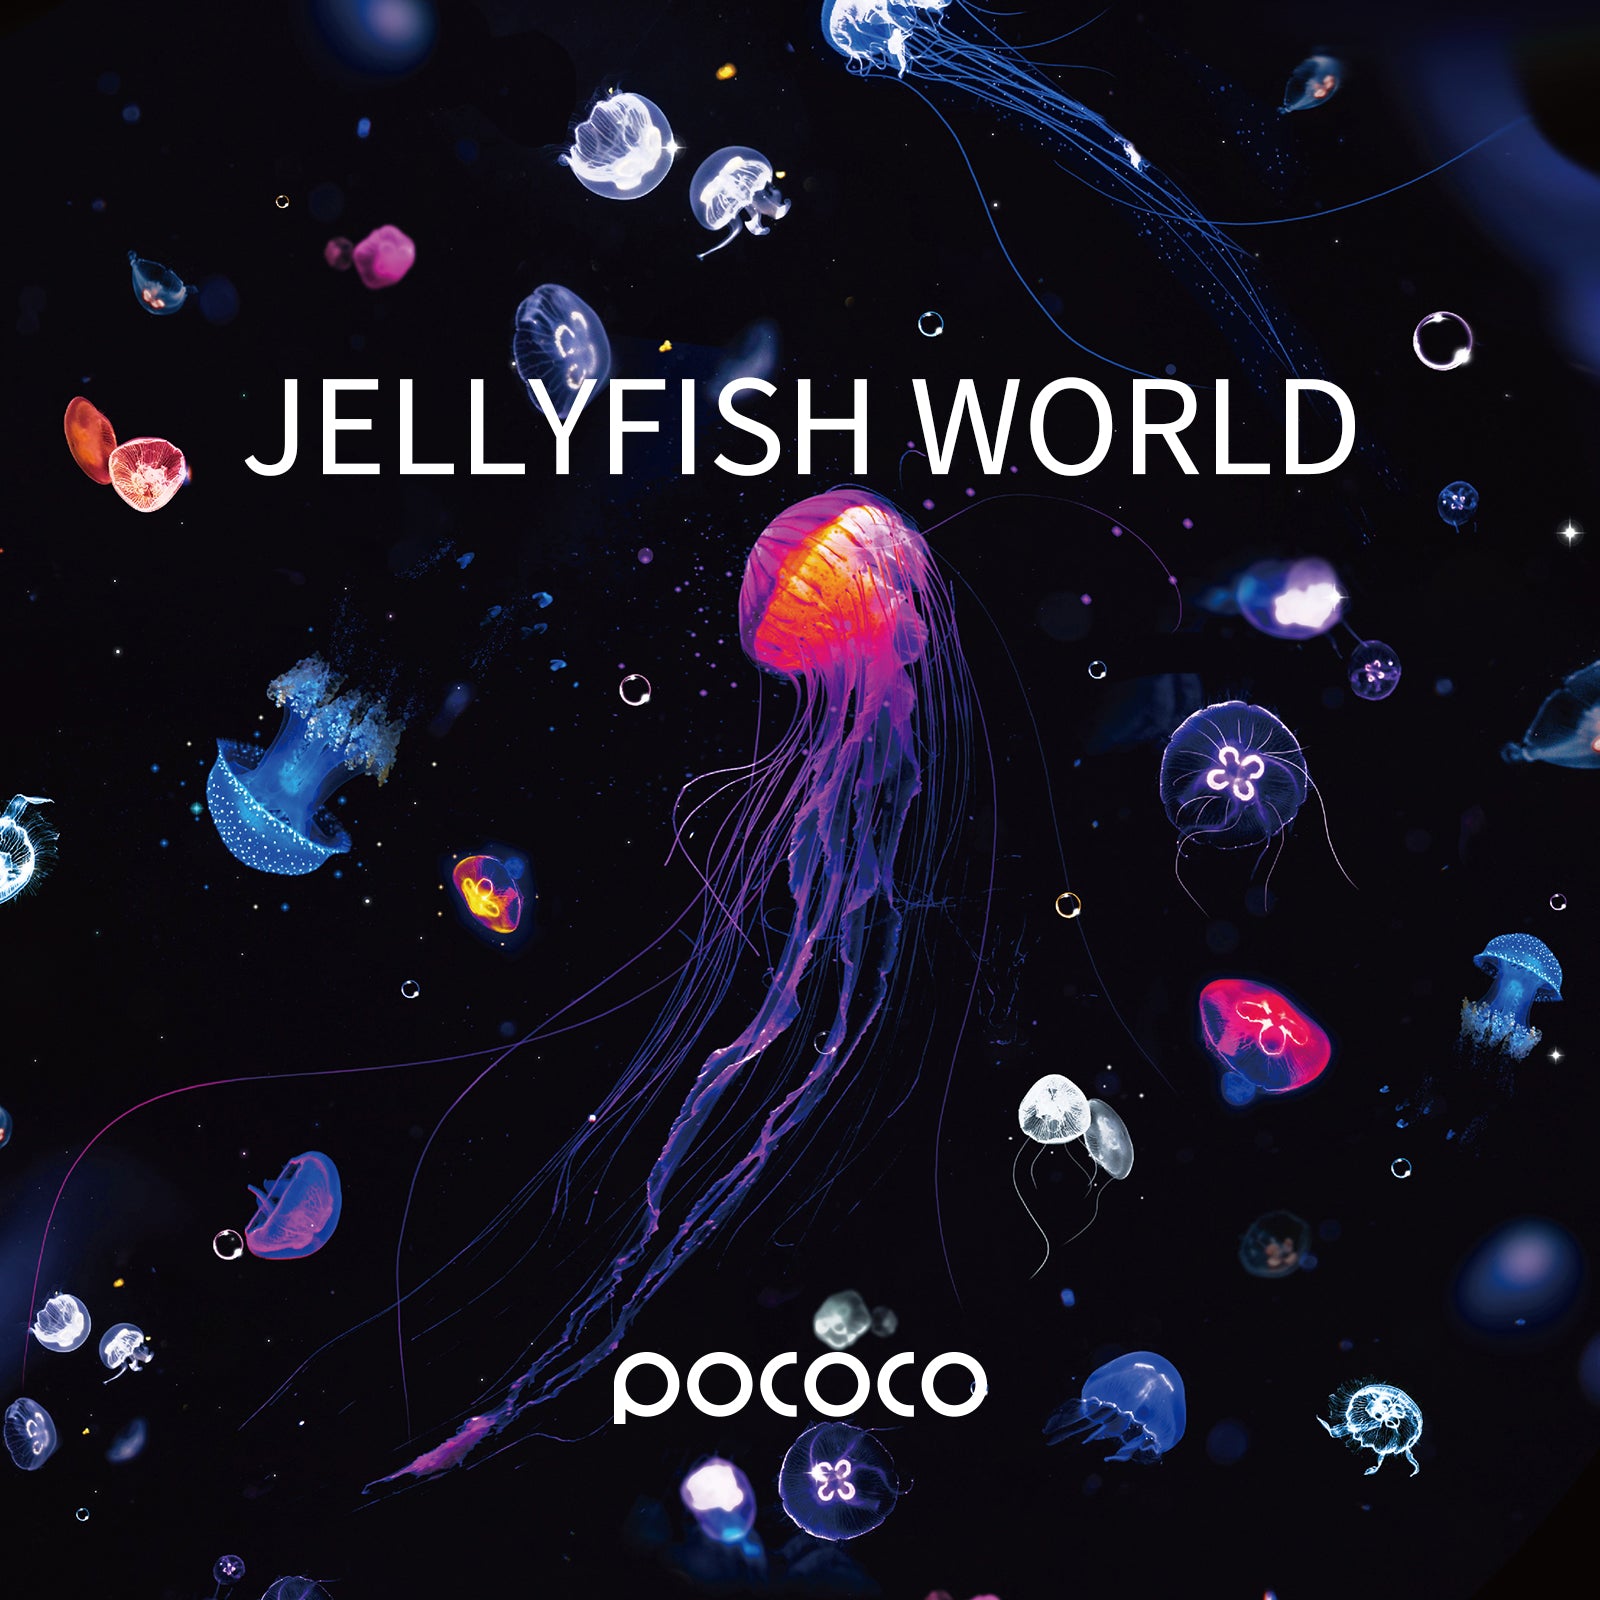 Jellyfish world - Pococo Galaxy Projector Discs